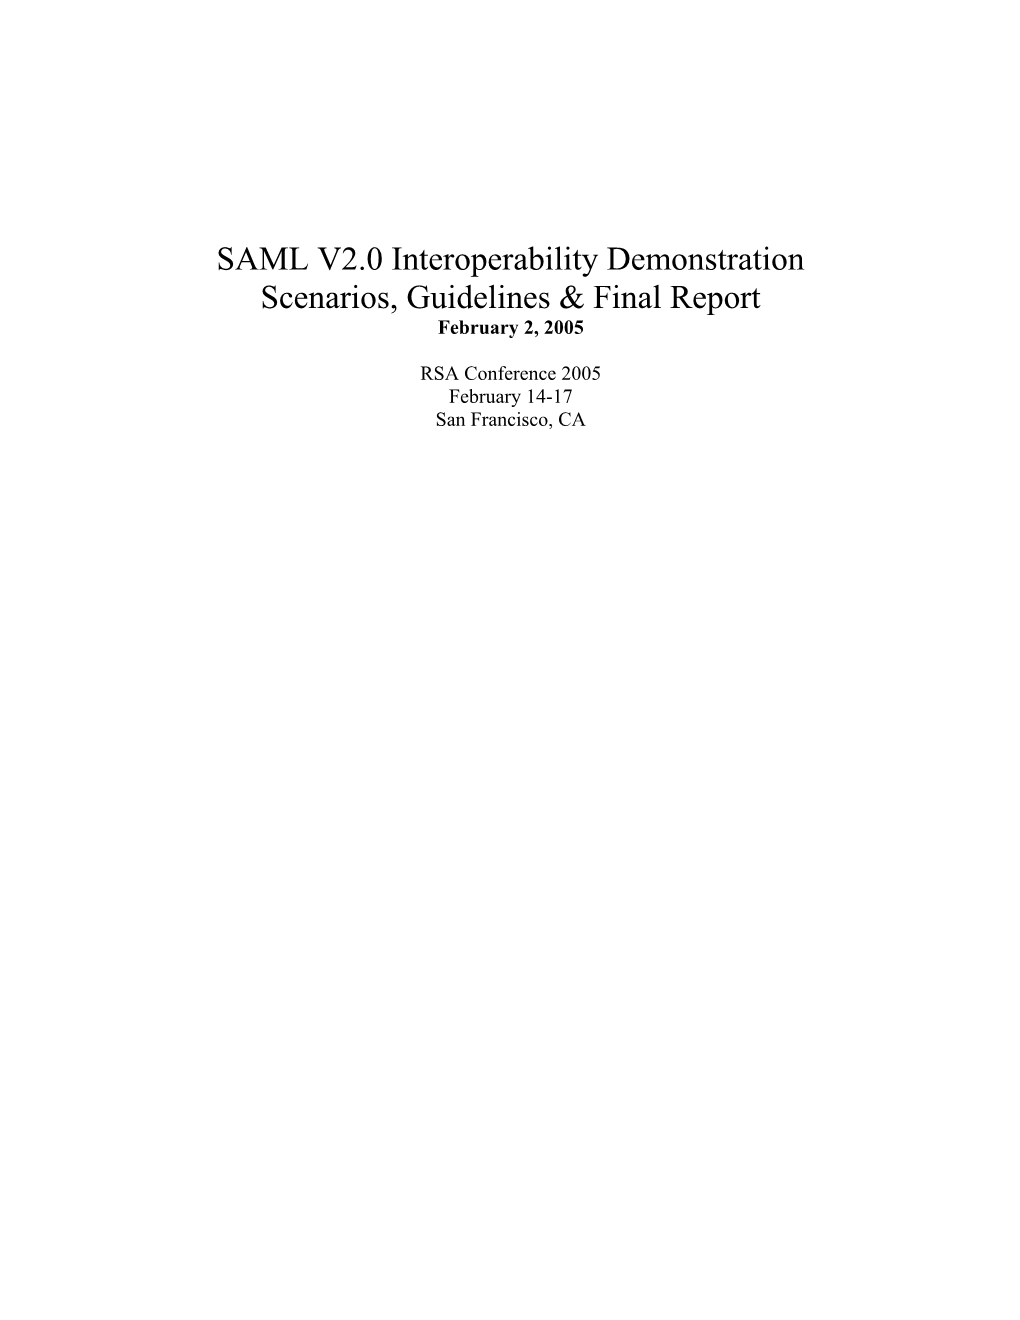 SAML V2.0 Interoperability Demonstration Scenarios,Guidelines & Final Report